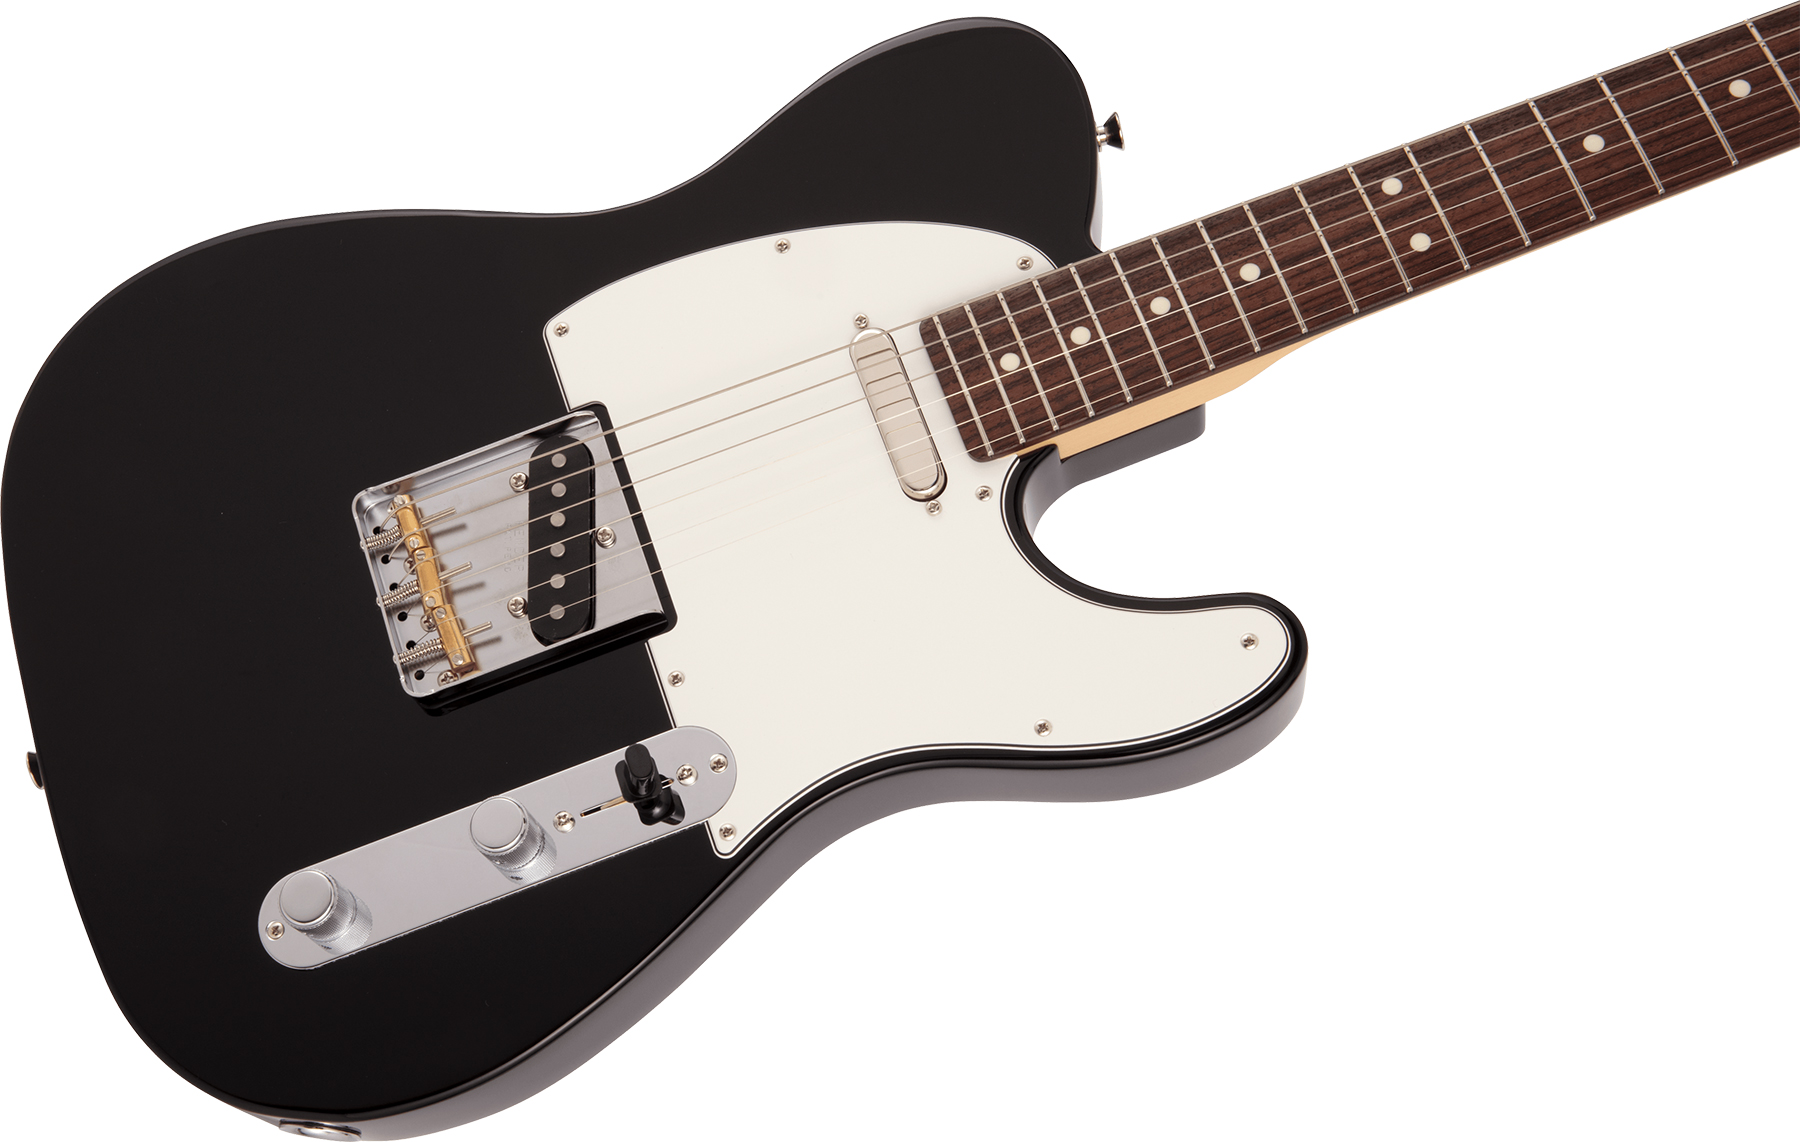 Fender Tele Hybrid Ii Jap 2s Ht Mn - Black - Guitarra eléctrica con forma de tel - Variation 2